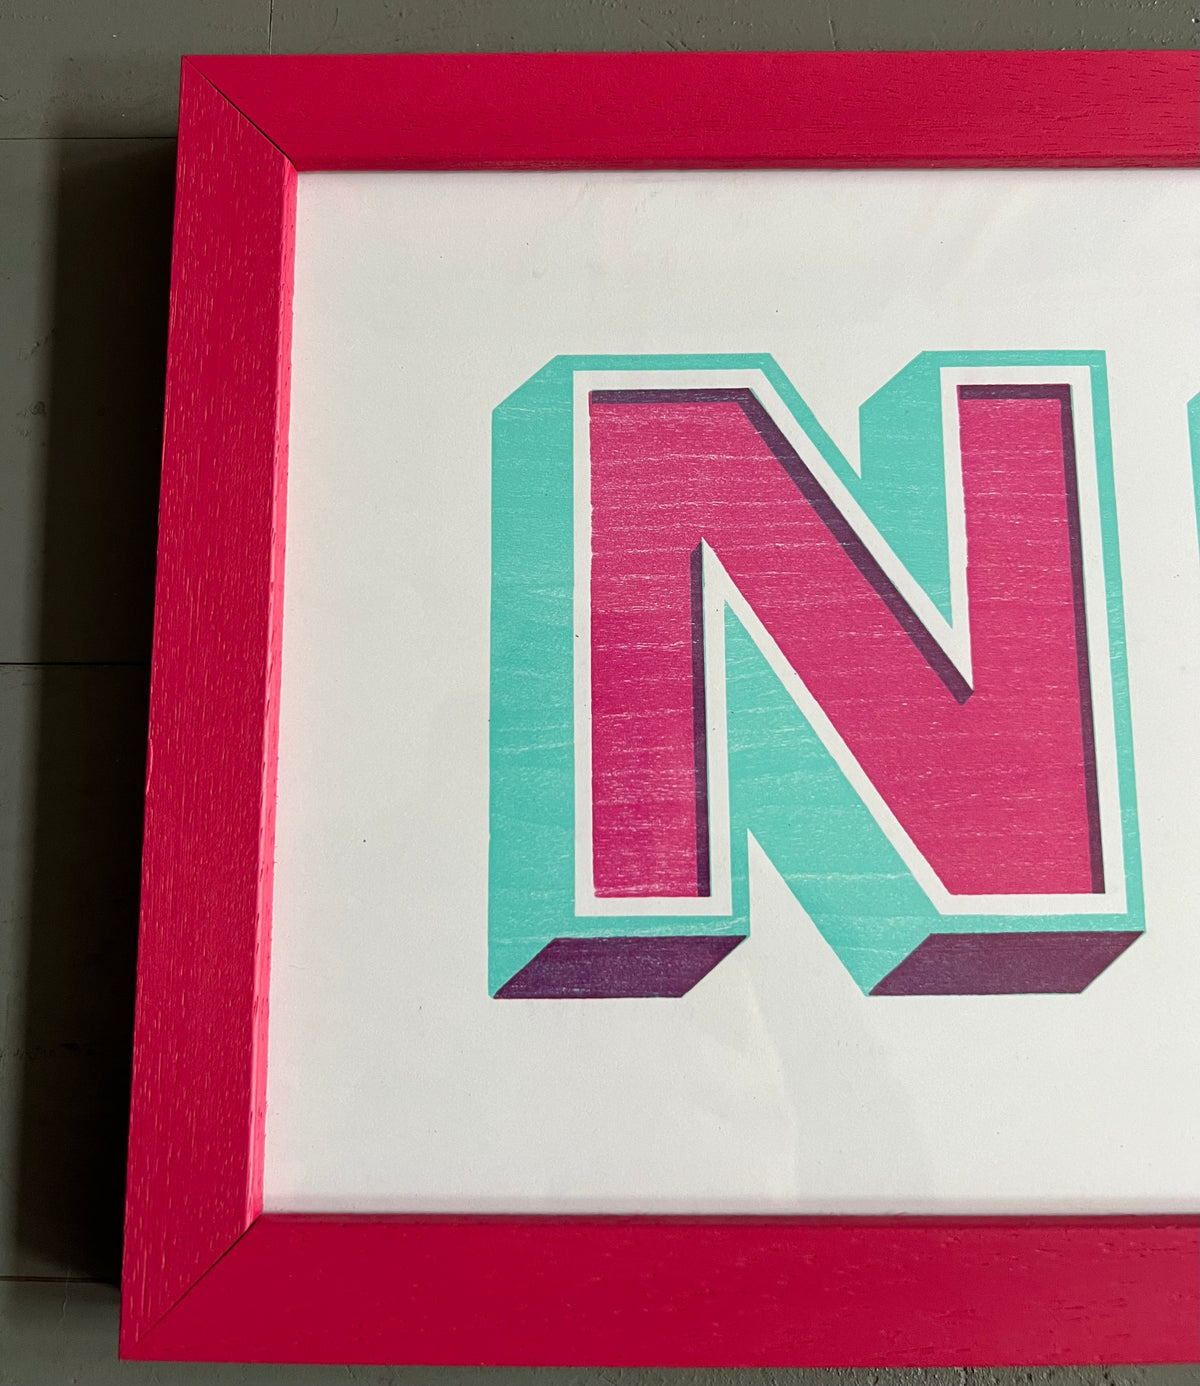 NICE (magenta frame) by Thomas Mayo